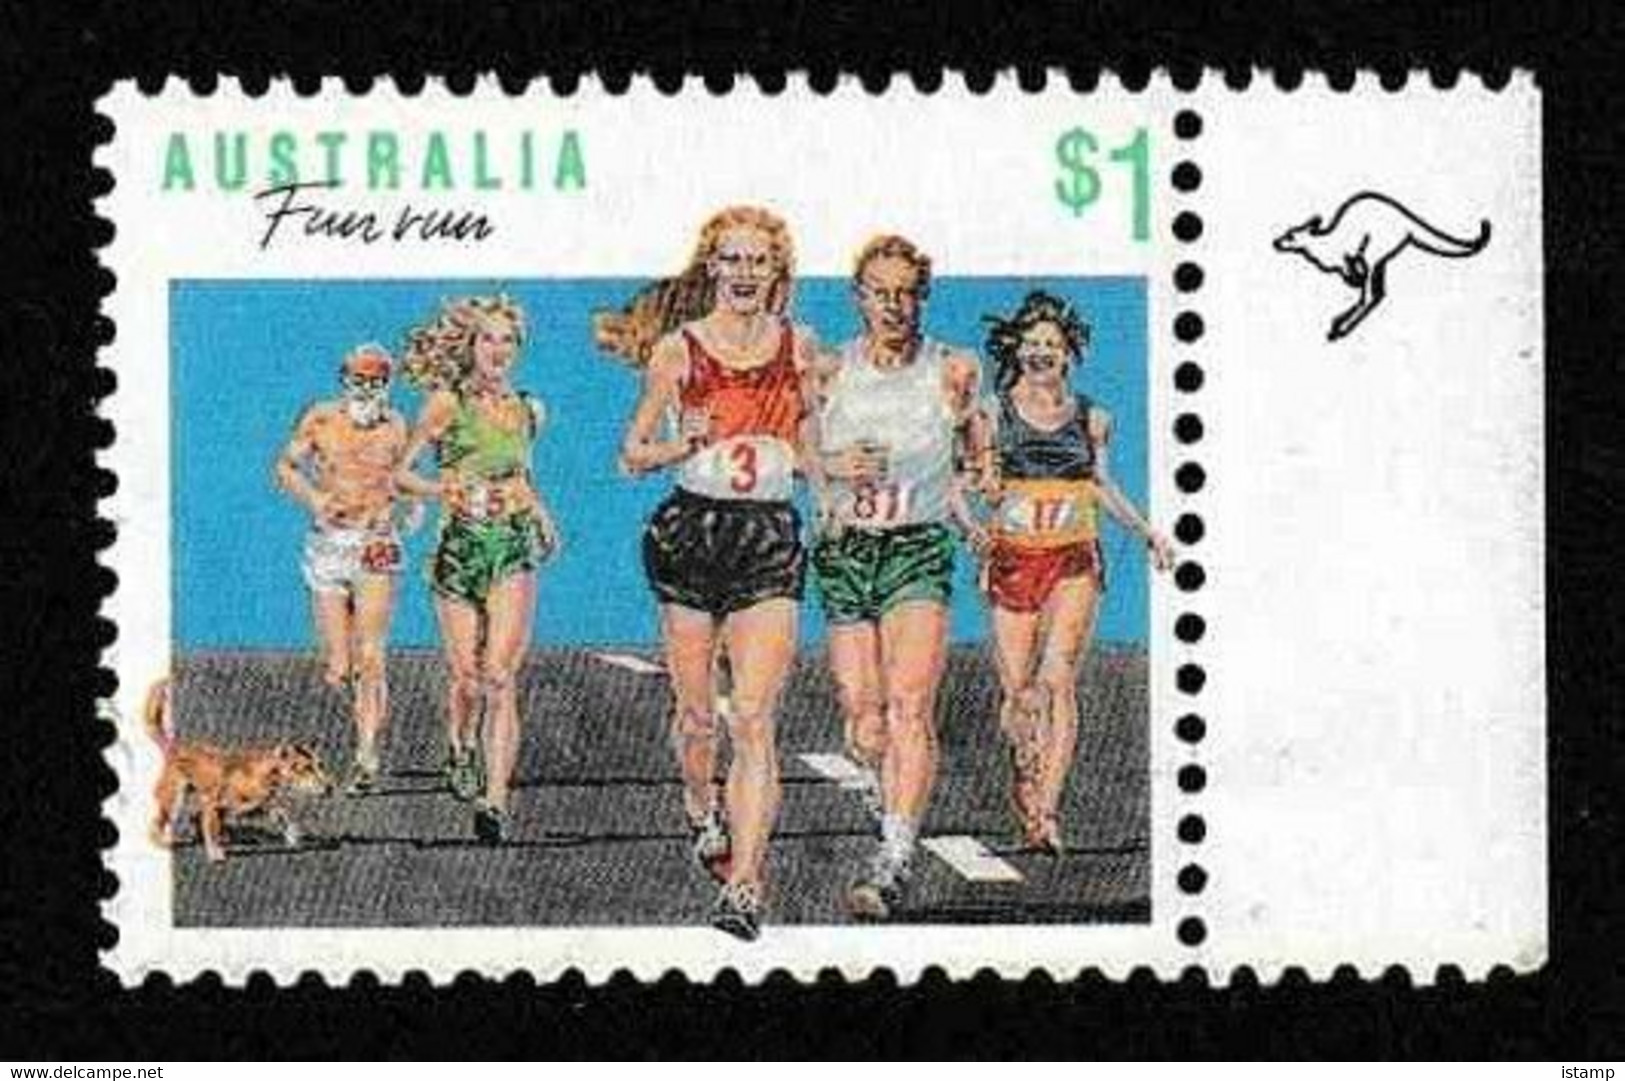 ⭕1990 - Australia SPORTS Series FUN RUNS (5th Reprint - Kangaroo) - $1 Stamp MNH⭕ - Ensayos & Reimpresiones